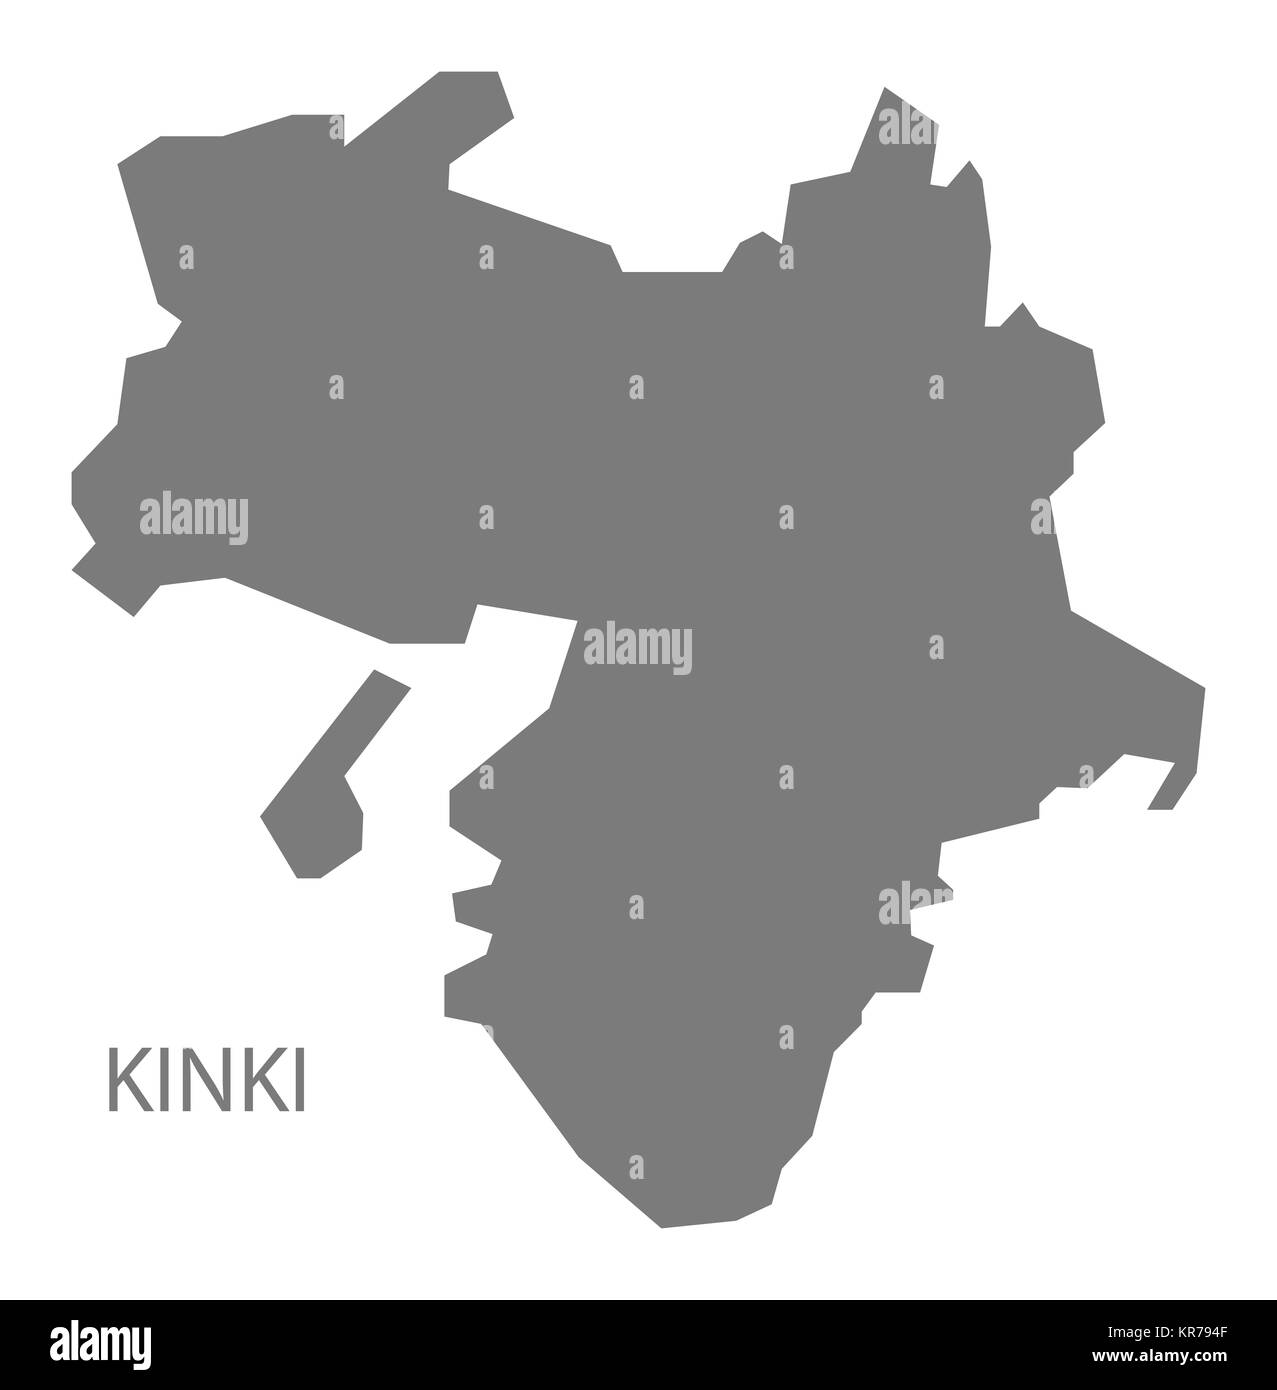 Kinki Japan Map grey Stock Photo